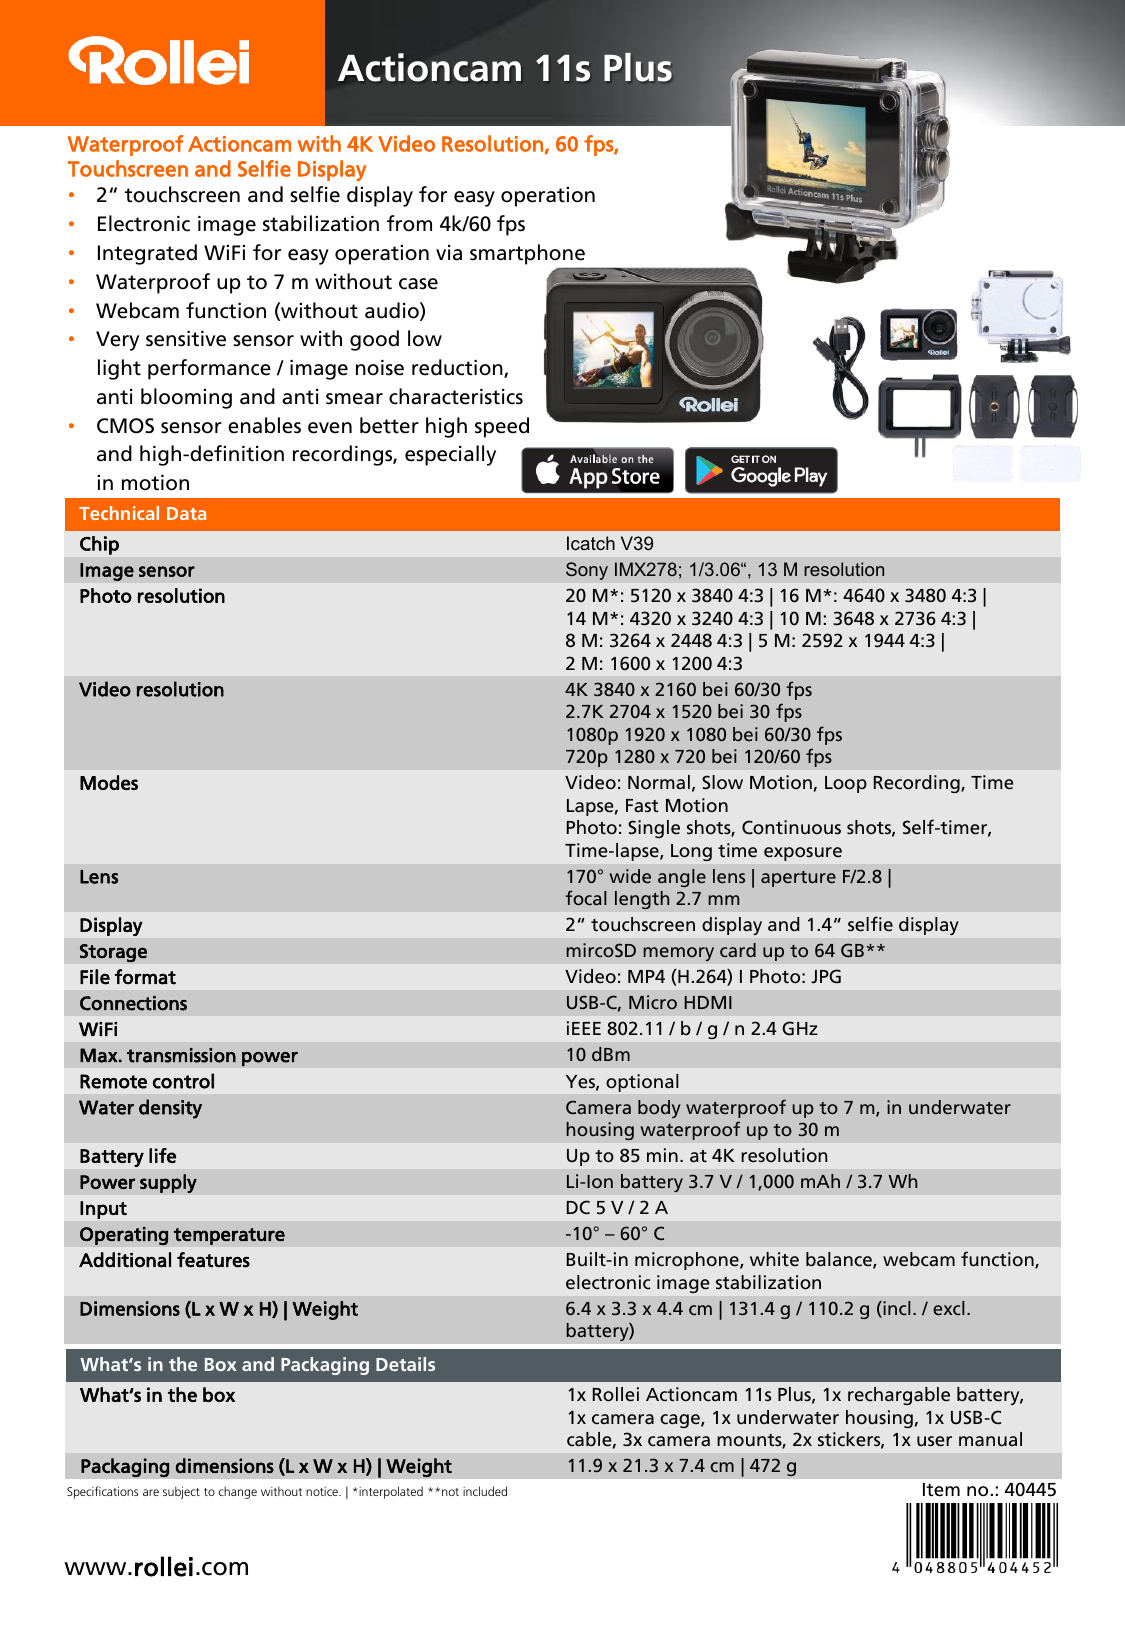 Rollei Actioncam Product 11s sheet Plus | Manualzz